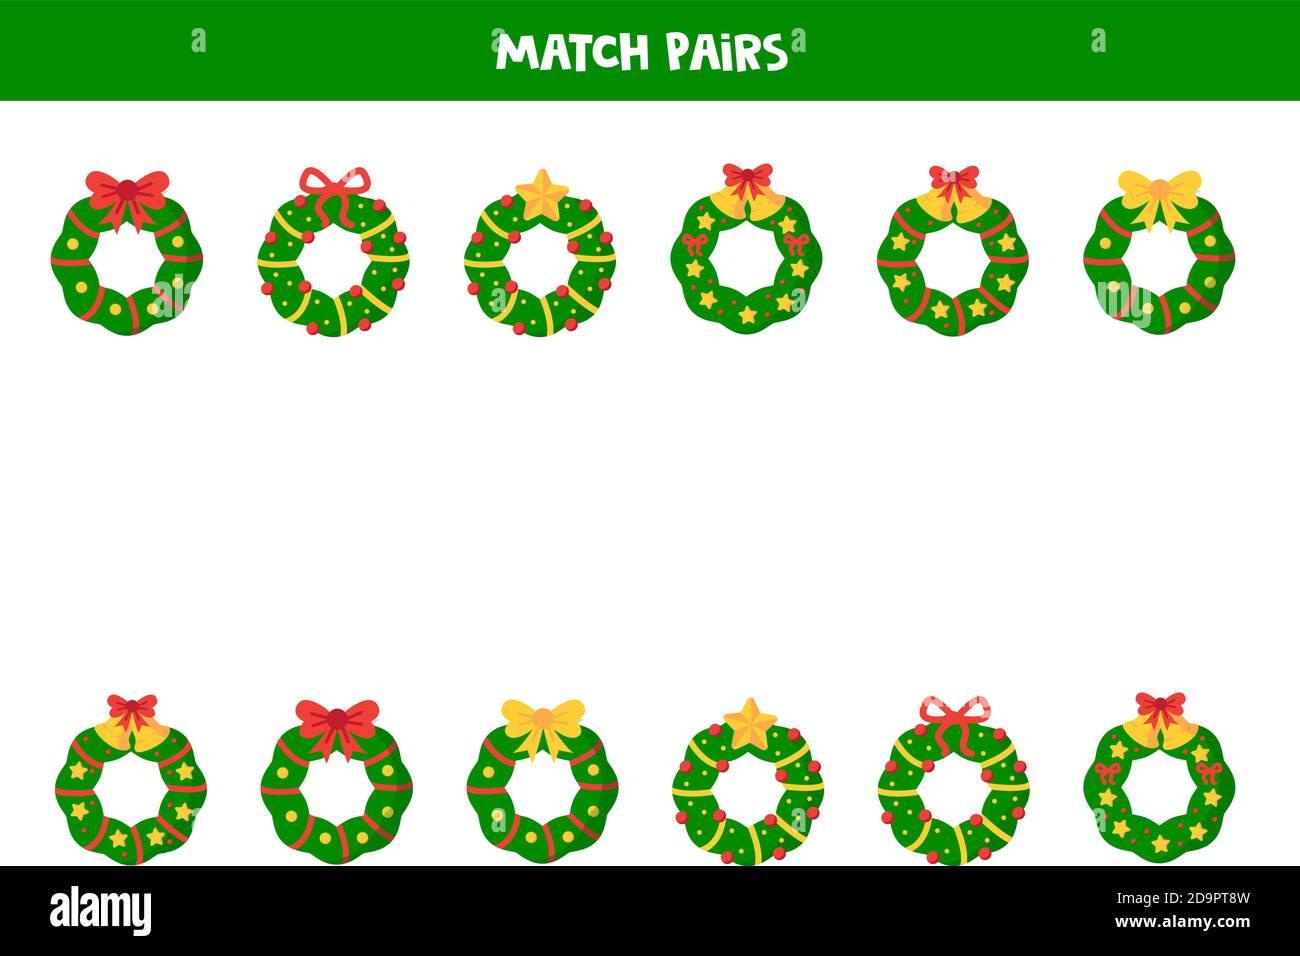 https://c8.alamy.com/comp/2D9PT8W/match-pairs-of-christmas-wreaths-game-for-kids-2D9PT8W.jpg